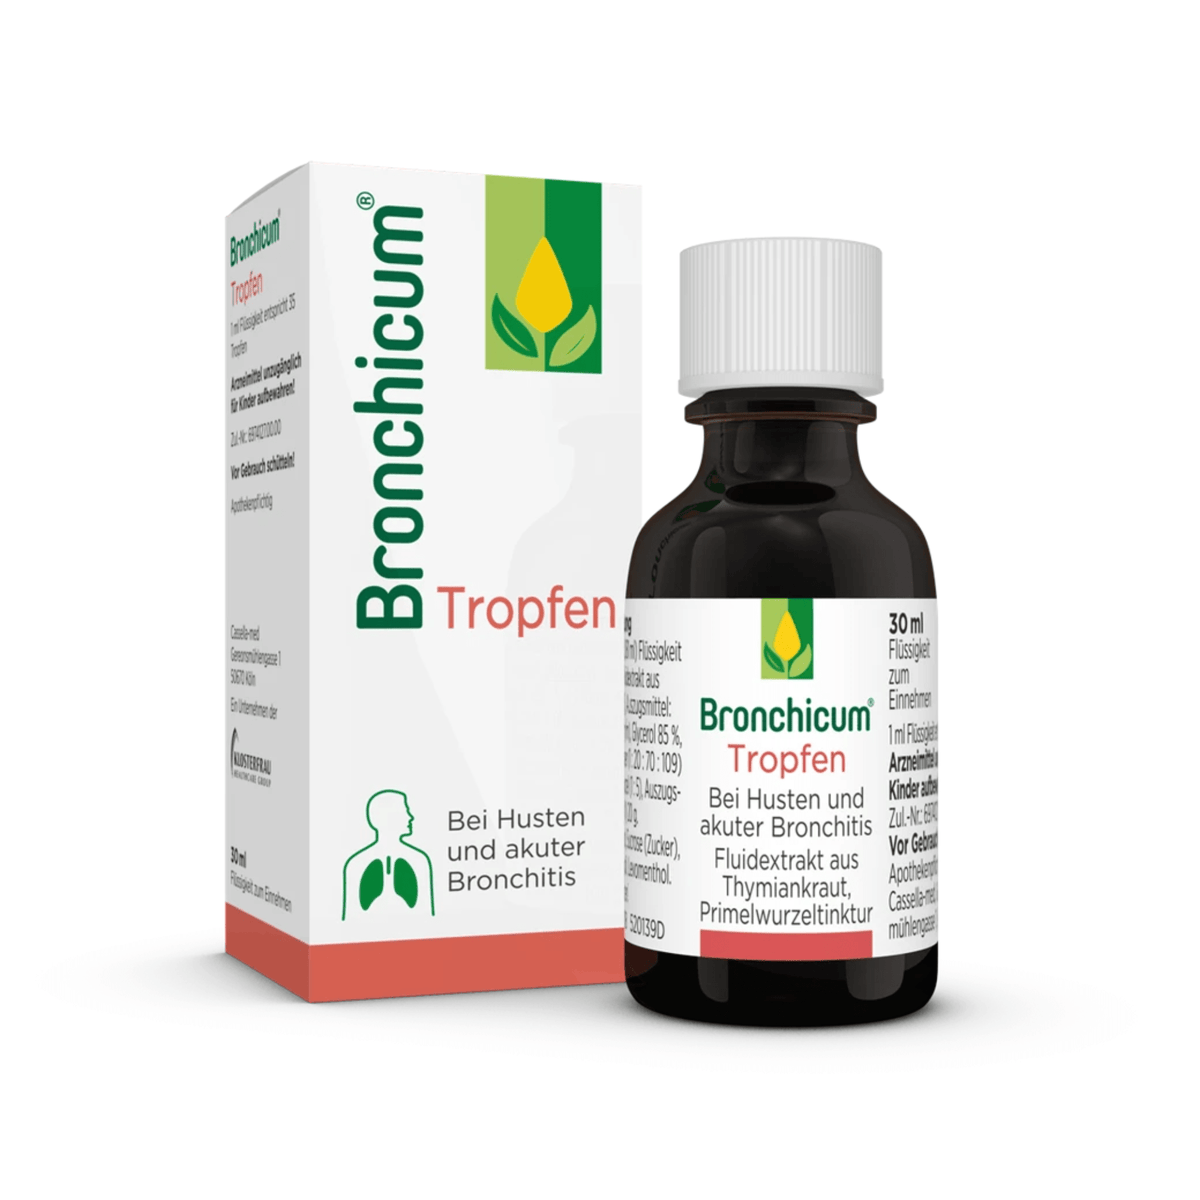 Primary Image of Bronchicum Tropfen